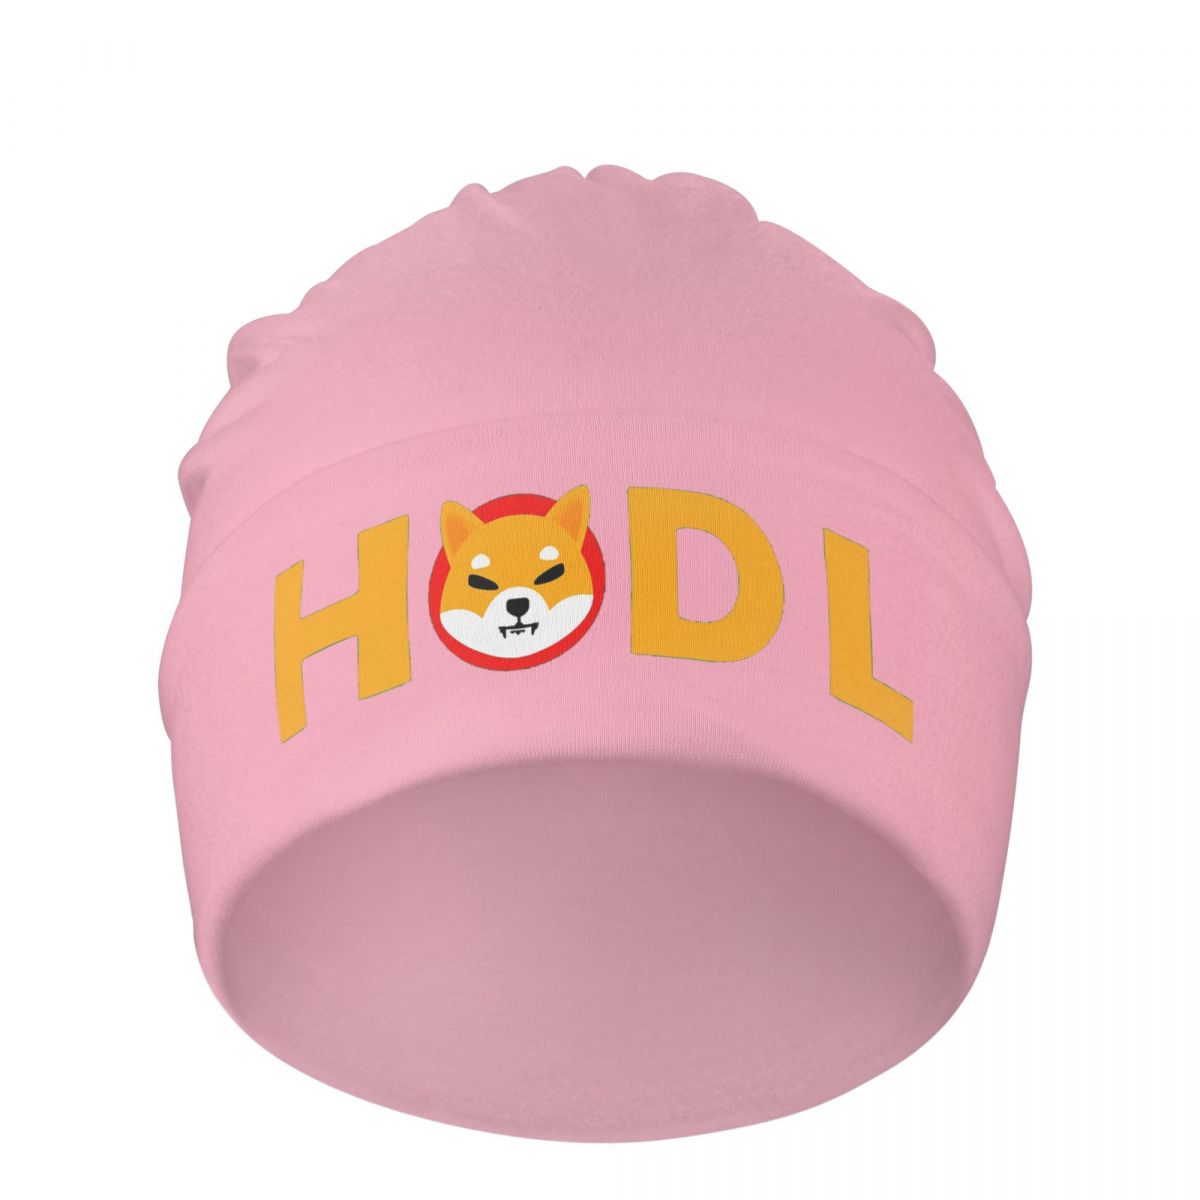 SHIB Shiba Inu HODL knitted hat 7 colors